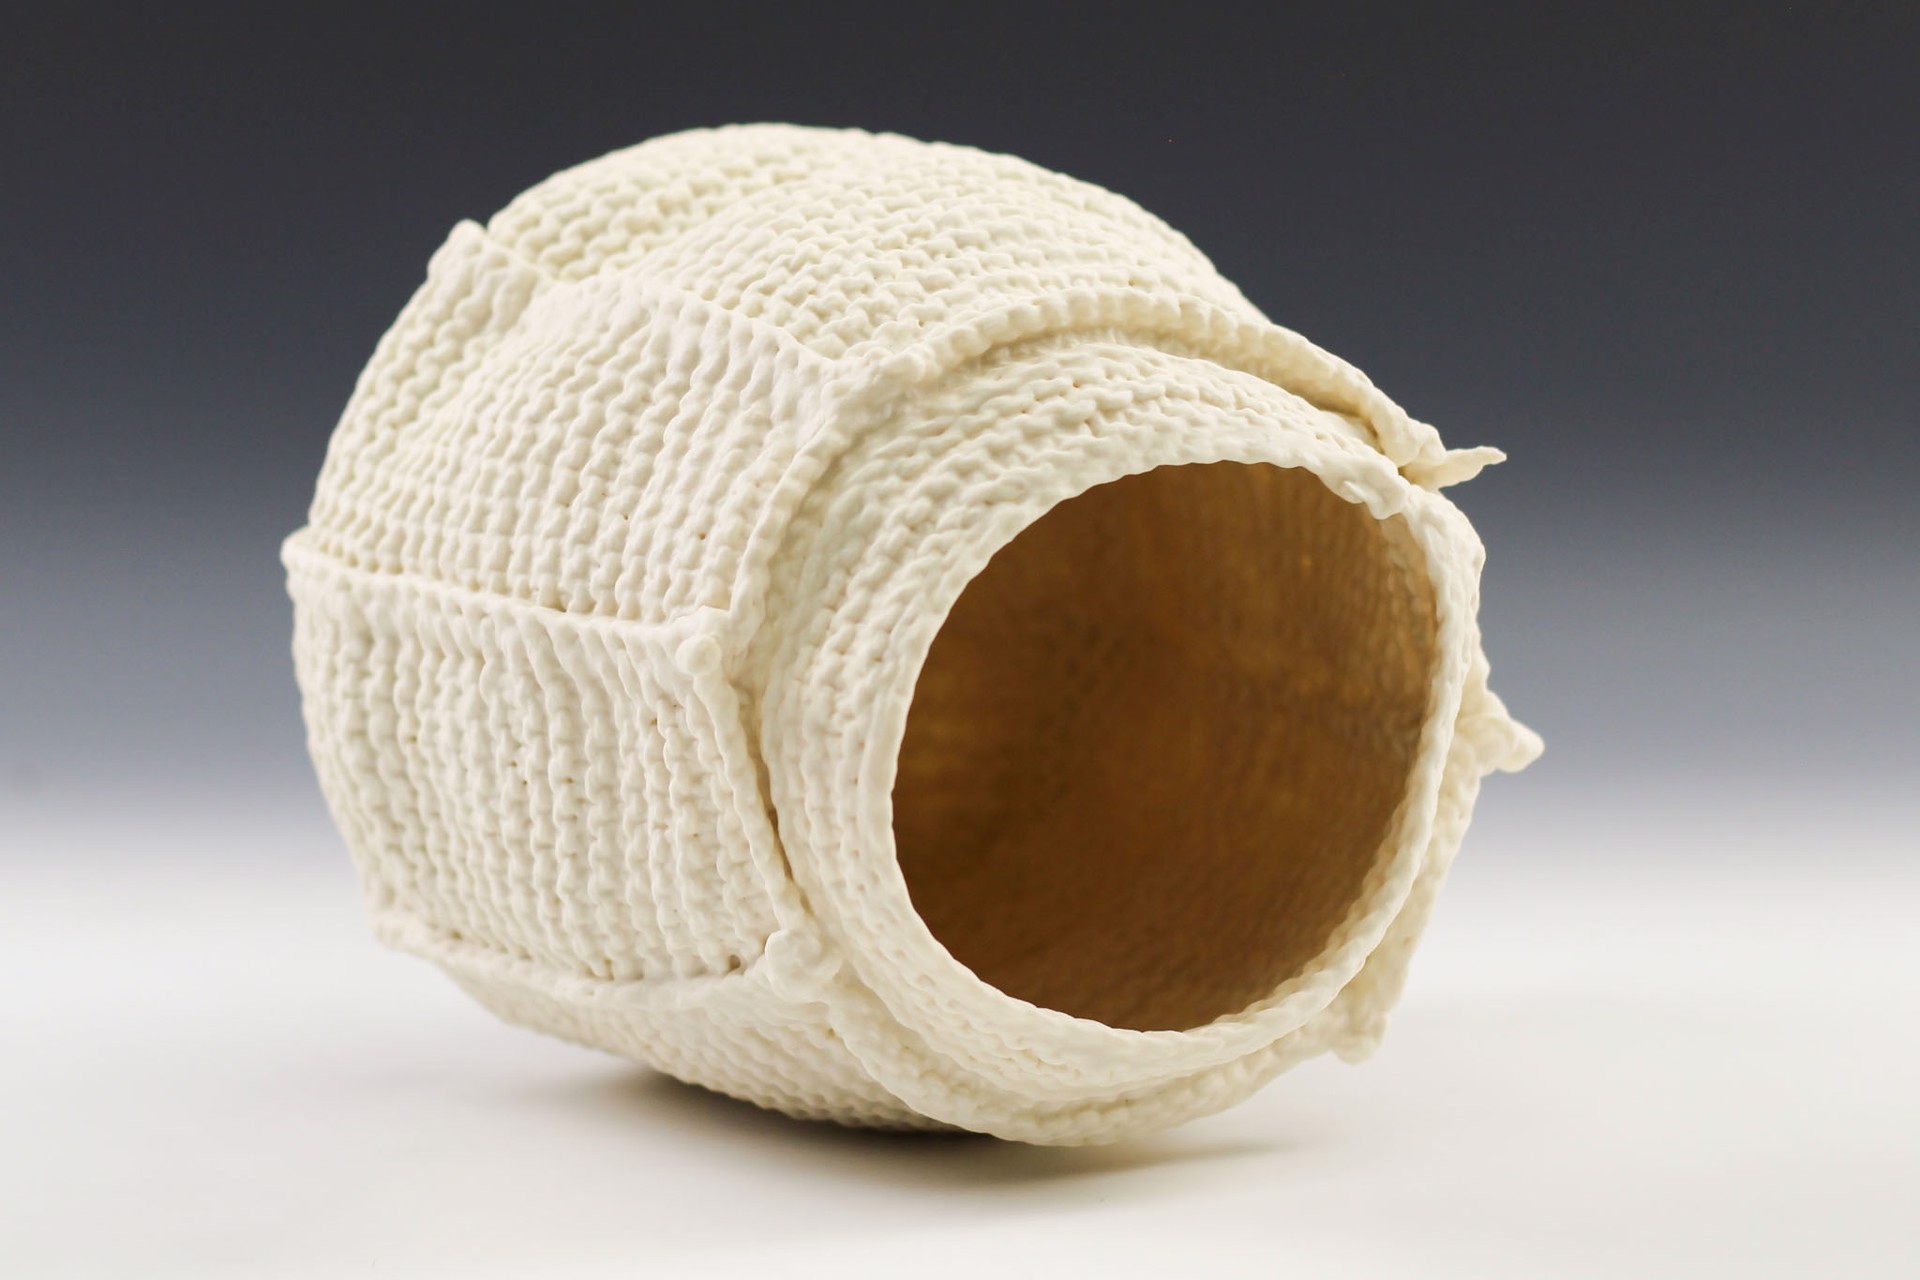 Garter Stitch Basket by Lisa Belsky